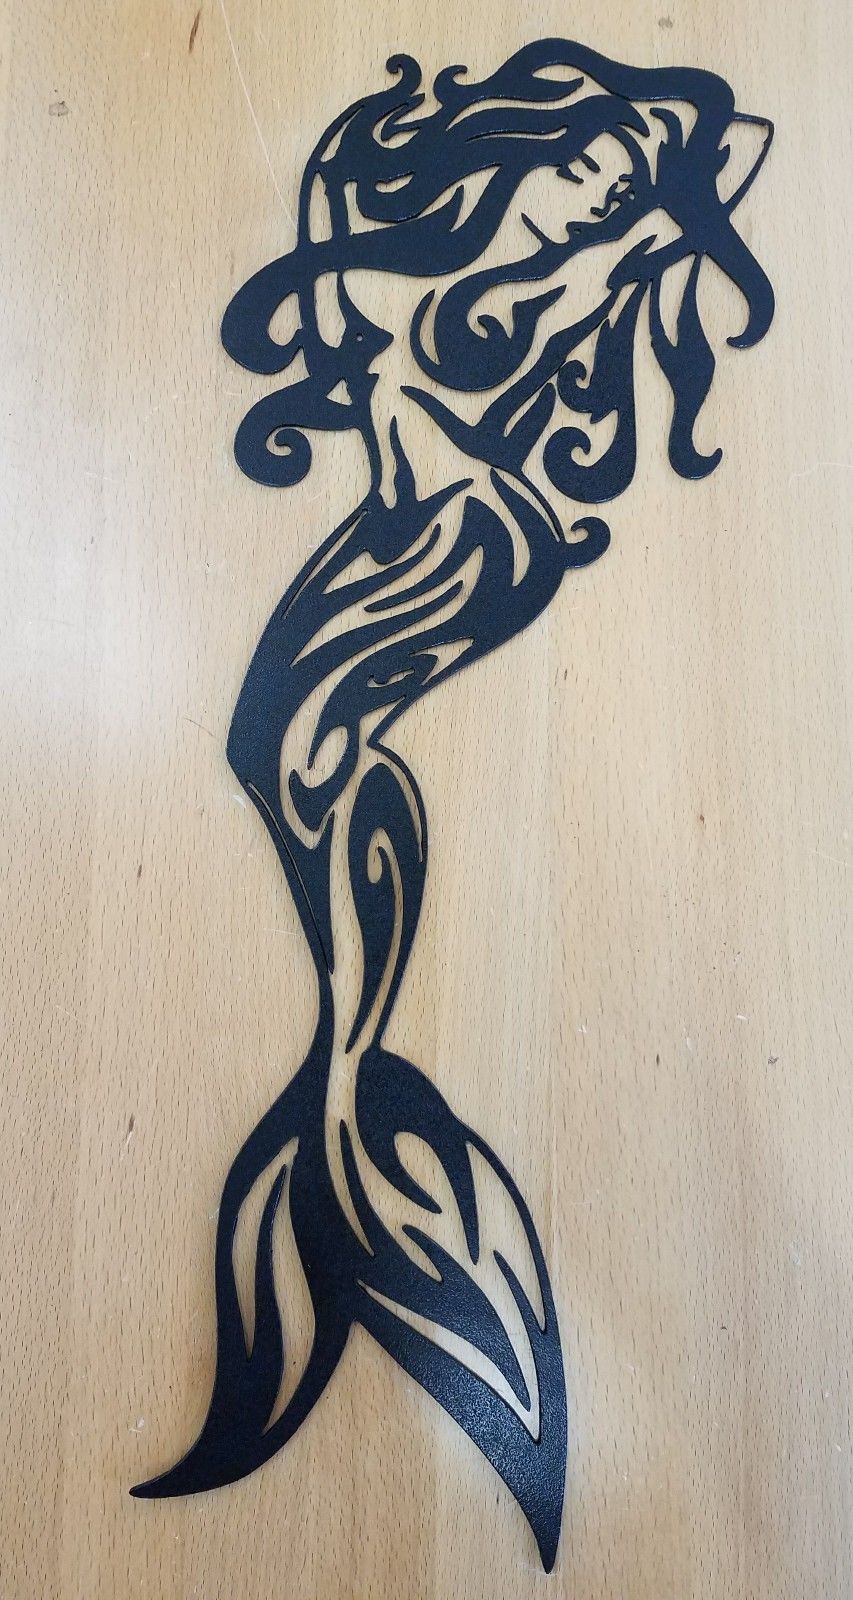 Mermaid metal wall art plasma cut decor gift idea nautical ...